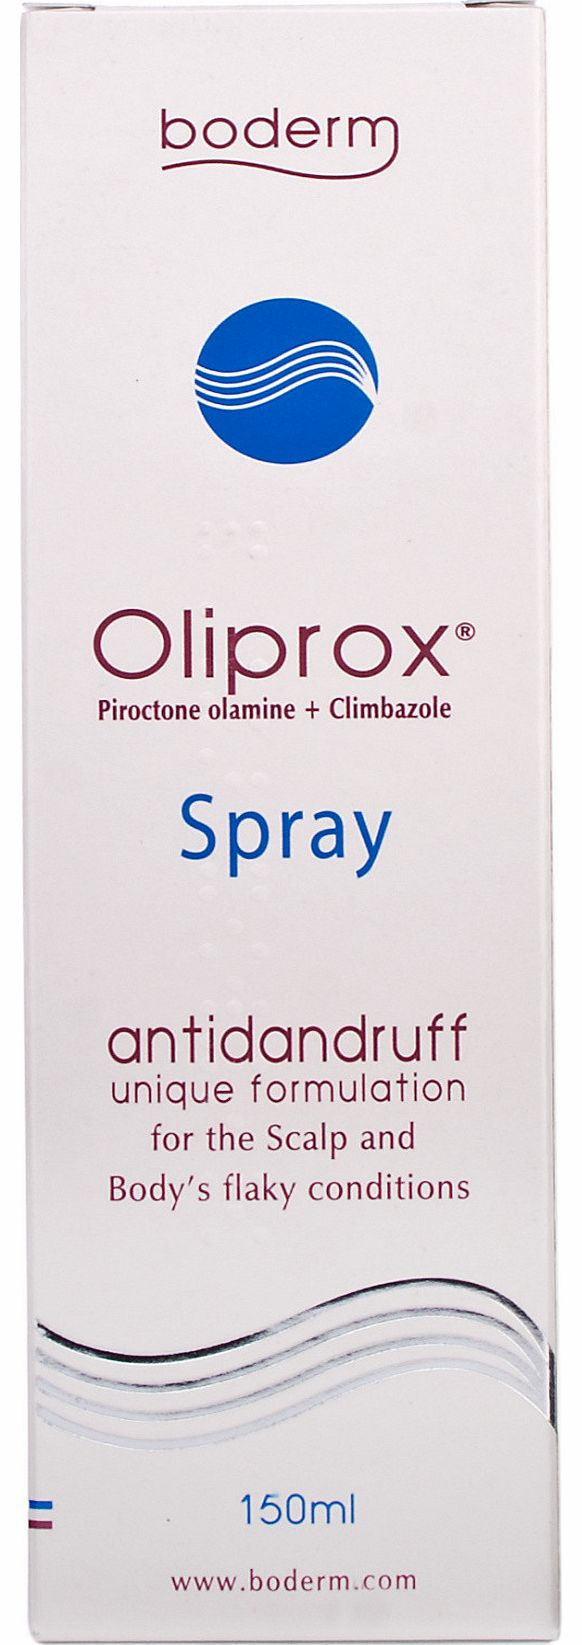 Boderm Oliprox Anti Dandruff Spray